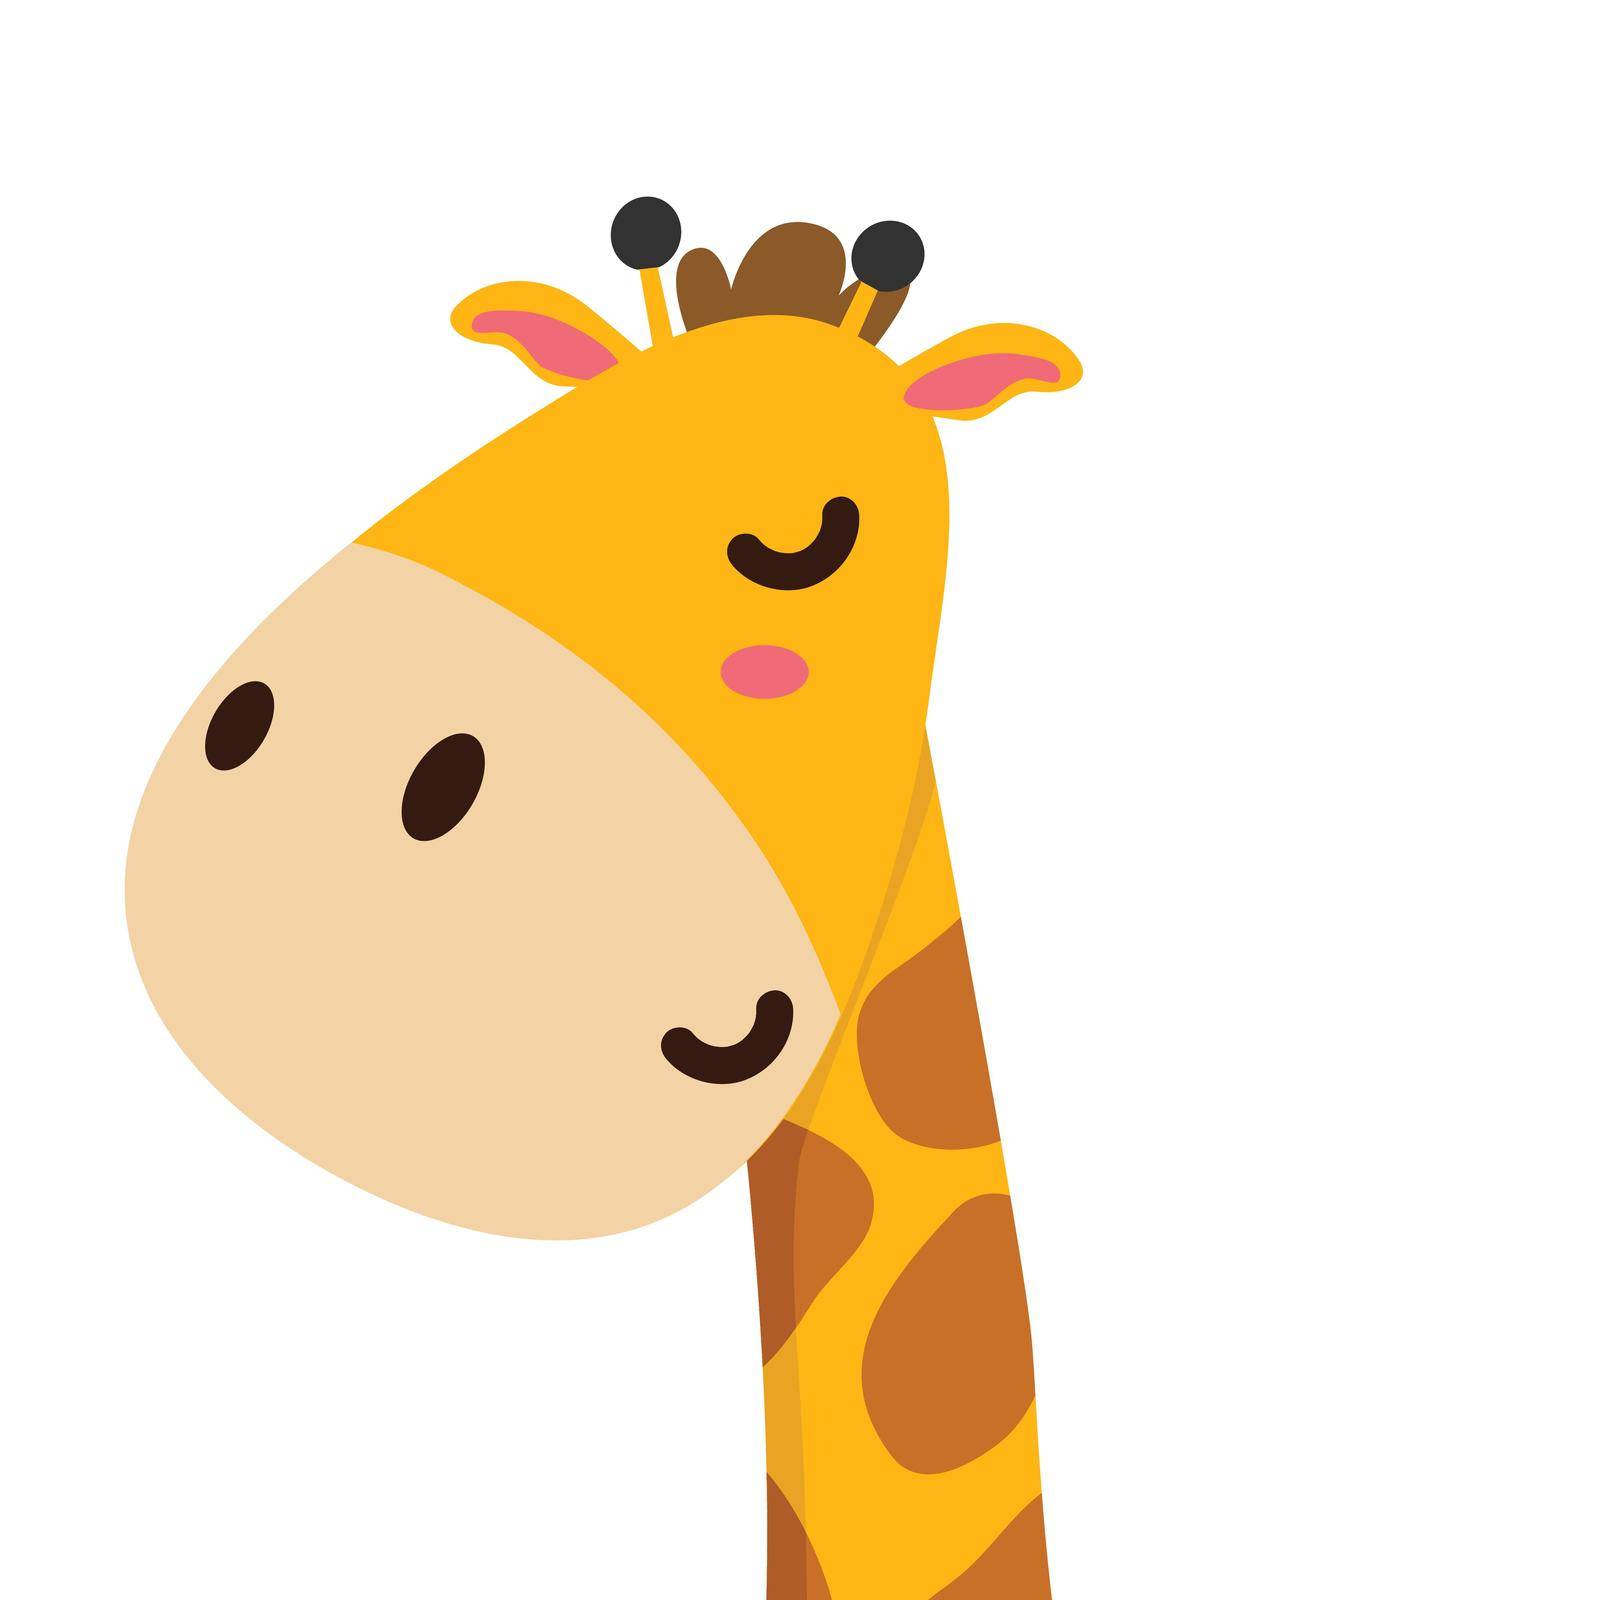 Animal head giraffe flat vector by focus_bell